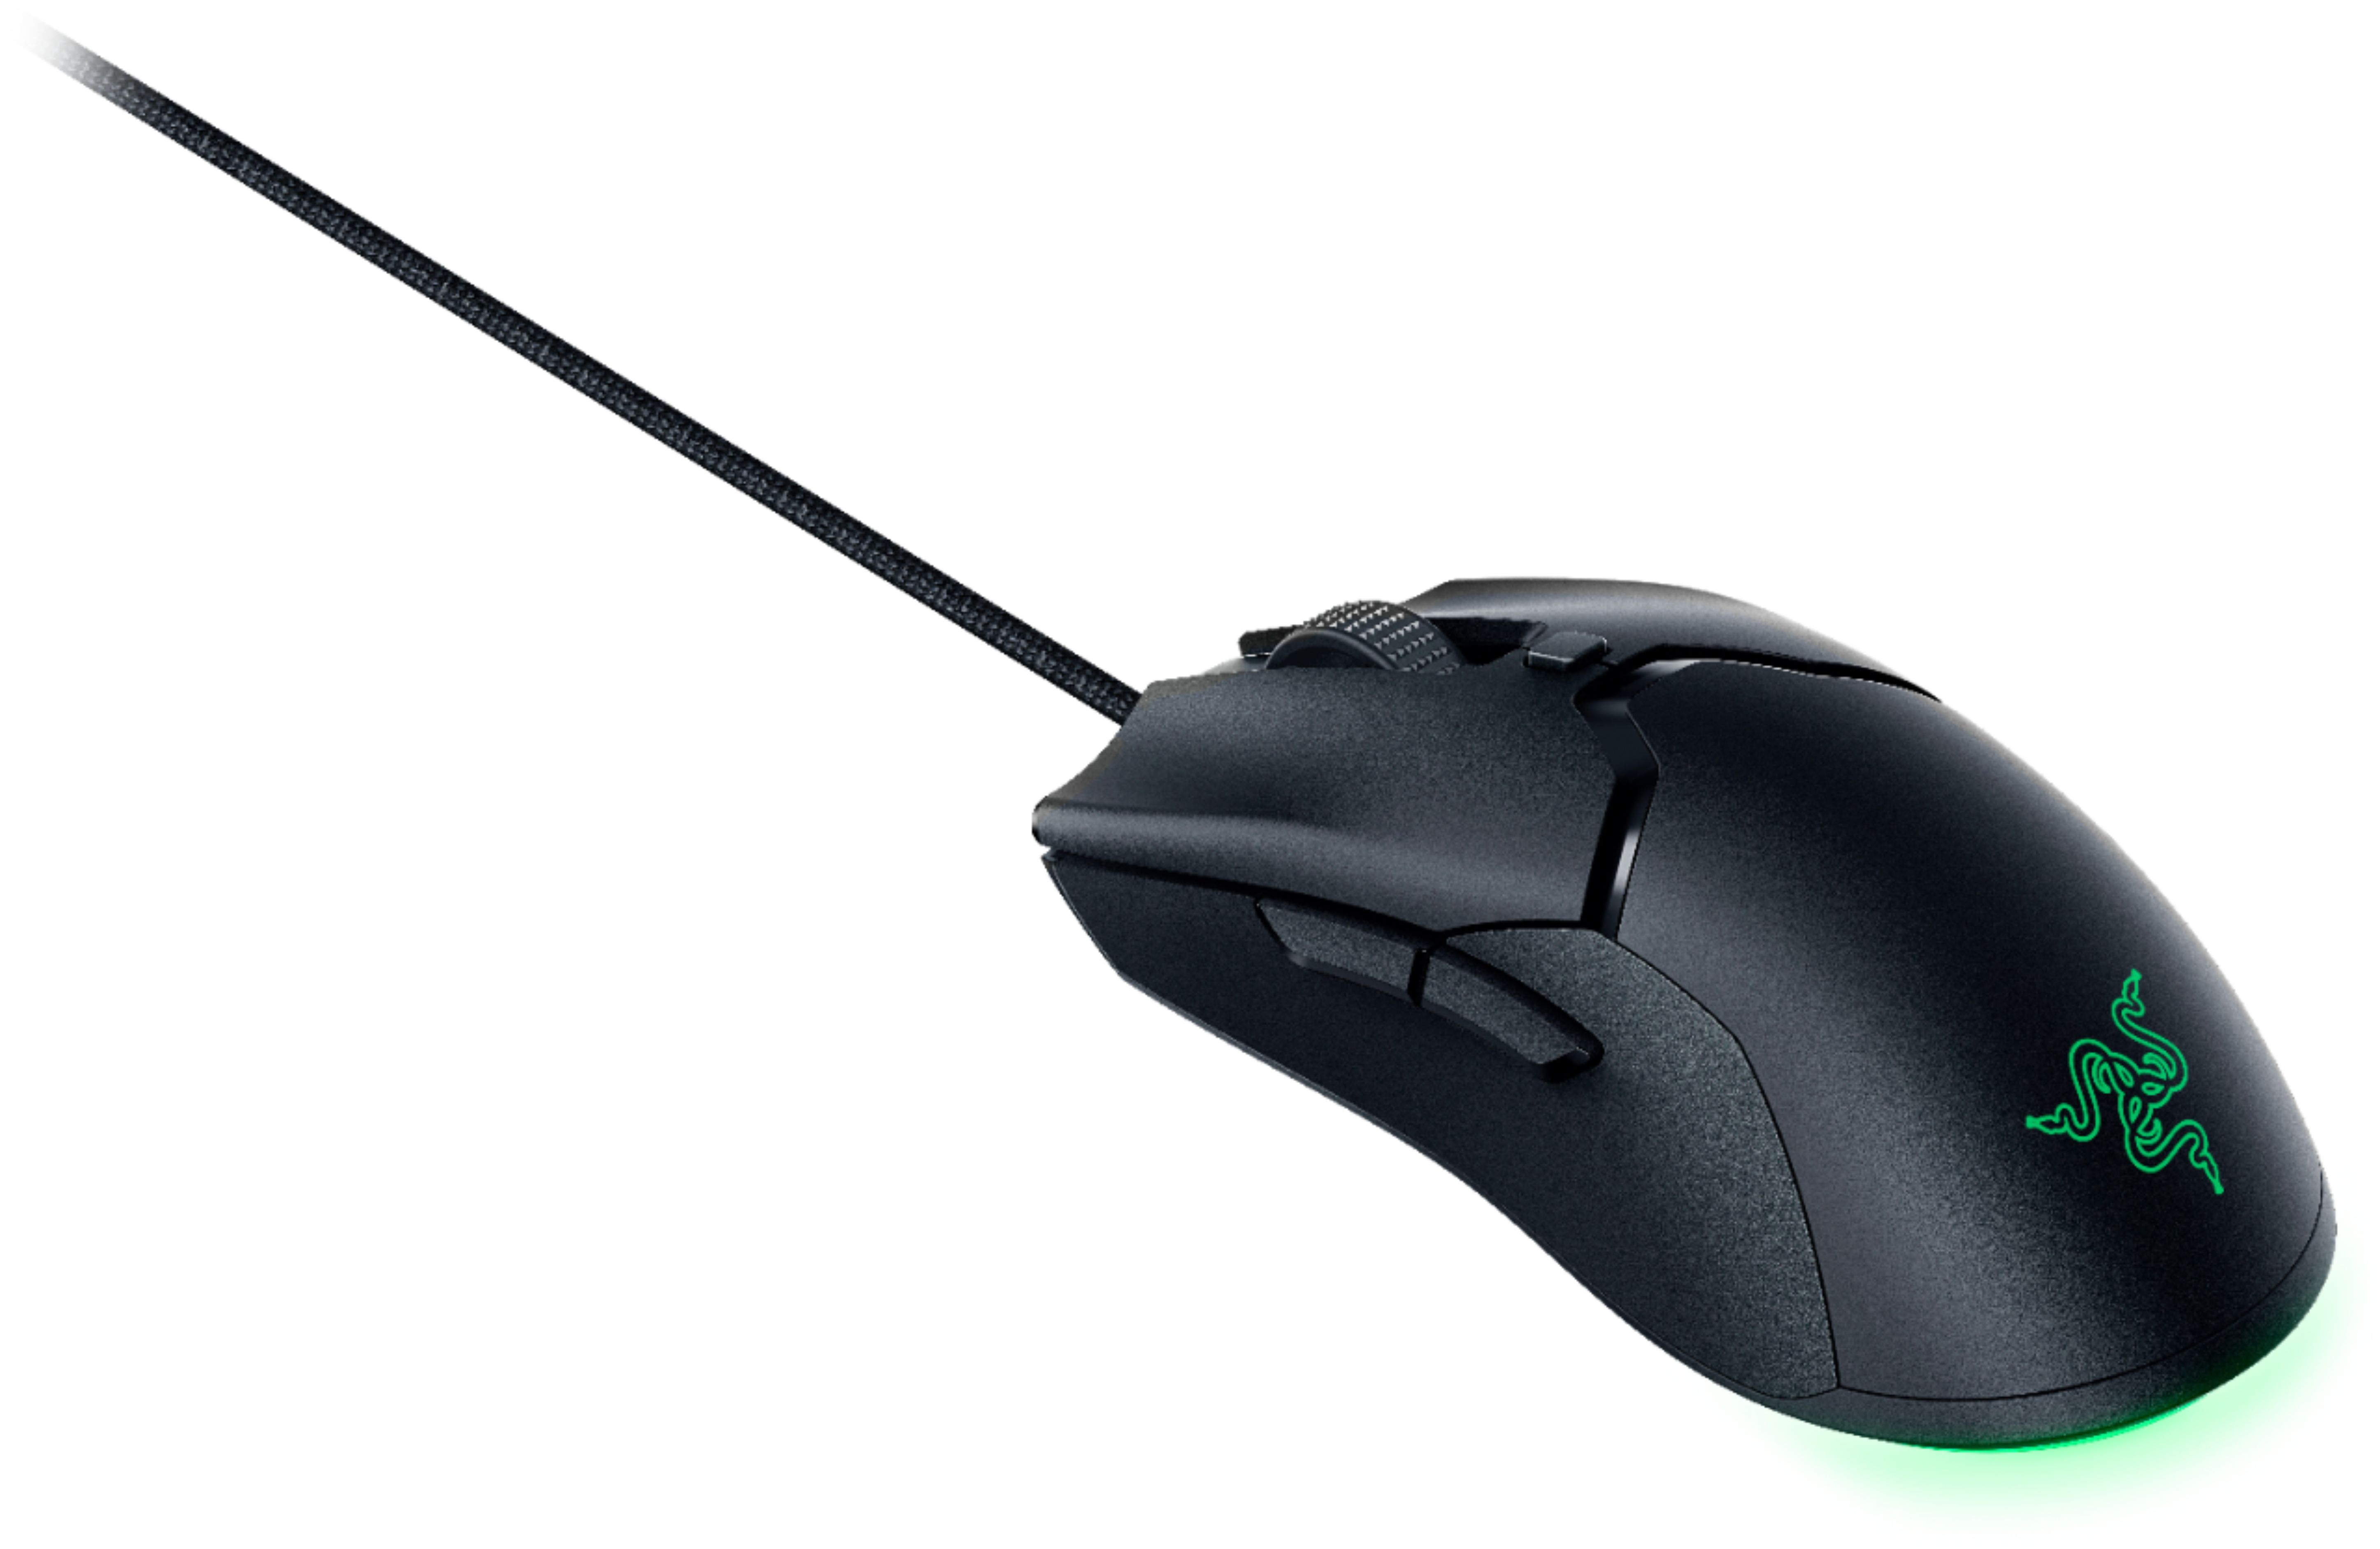 Razer Viper Mini Gaming Mouse Review - IGN